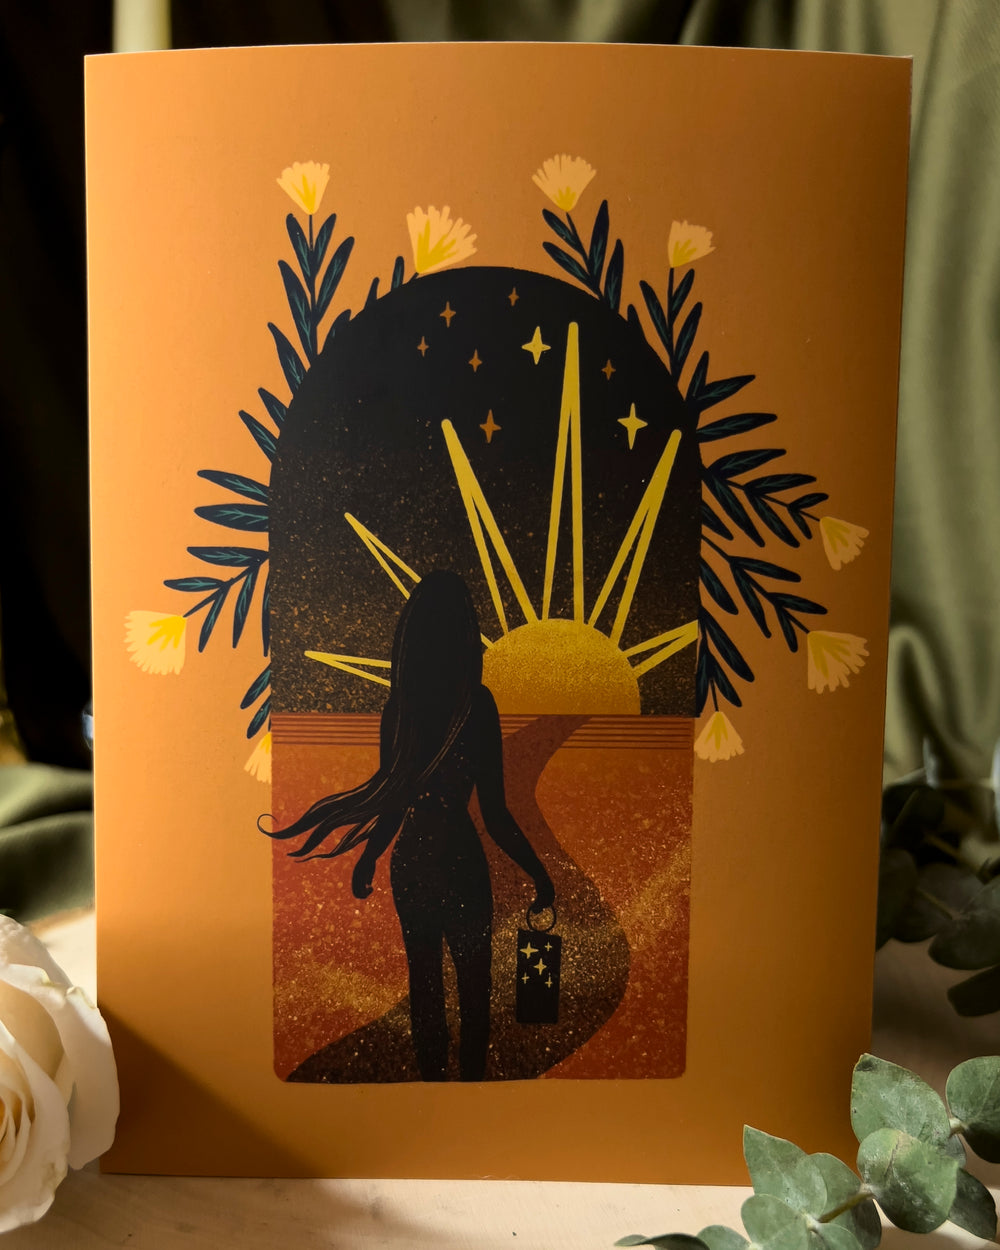 An art print depicting a traveler walking through the desert towards a setting sun with a lantern in their hand.